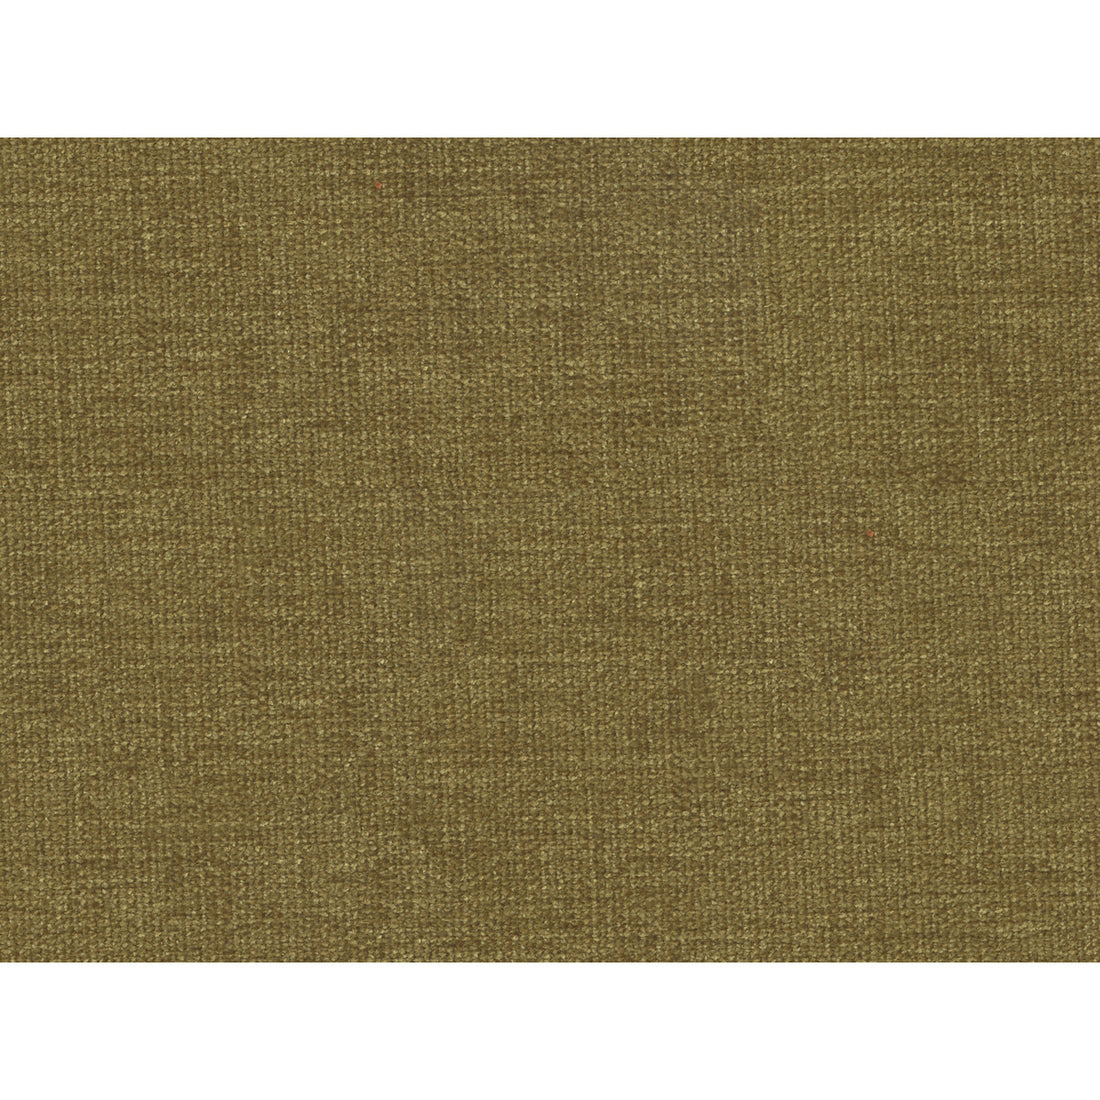 Kravet Smart fabric in 34959-33 color - pattern 34959.33.0 - by Kravet Smart in the Performance Kravetarmor collection